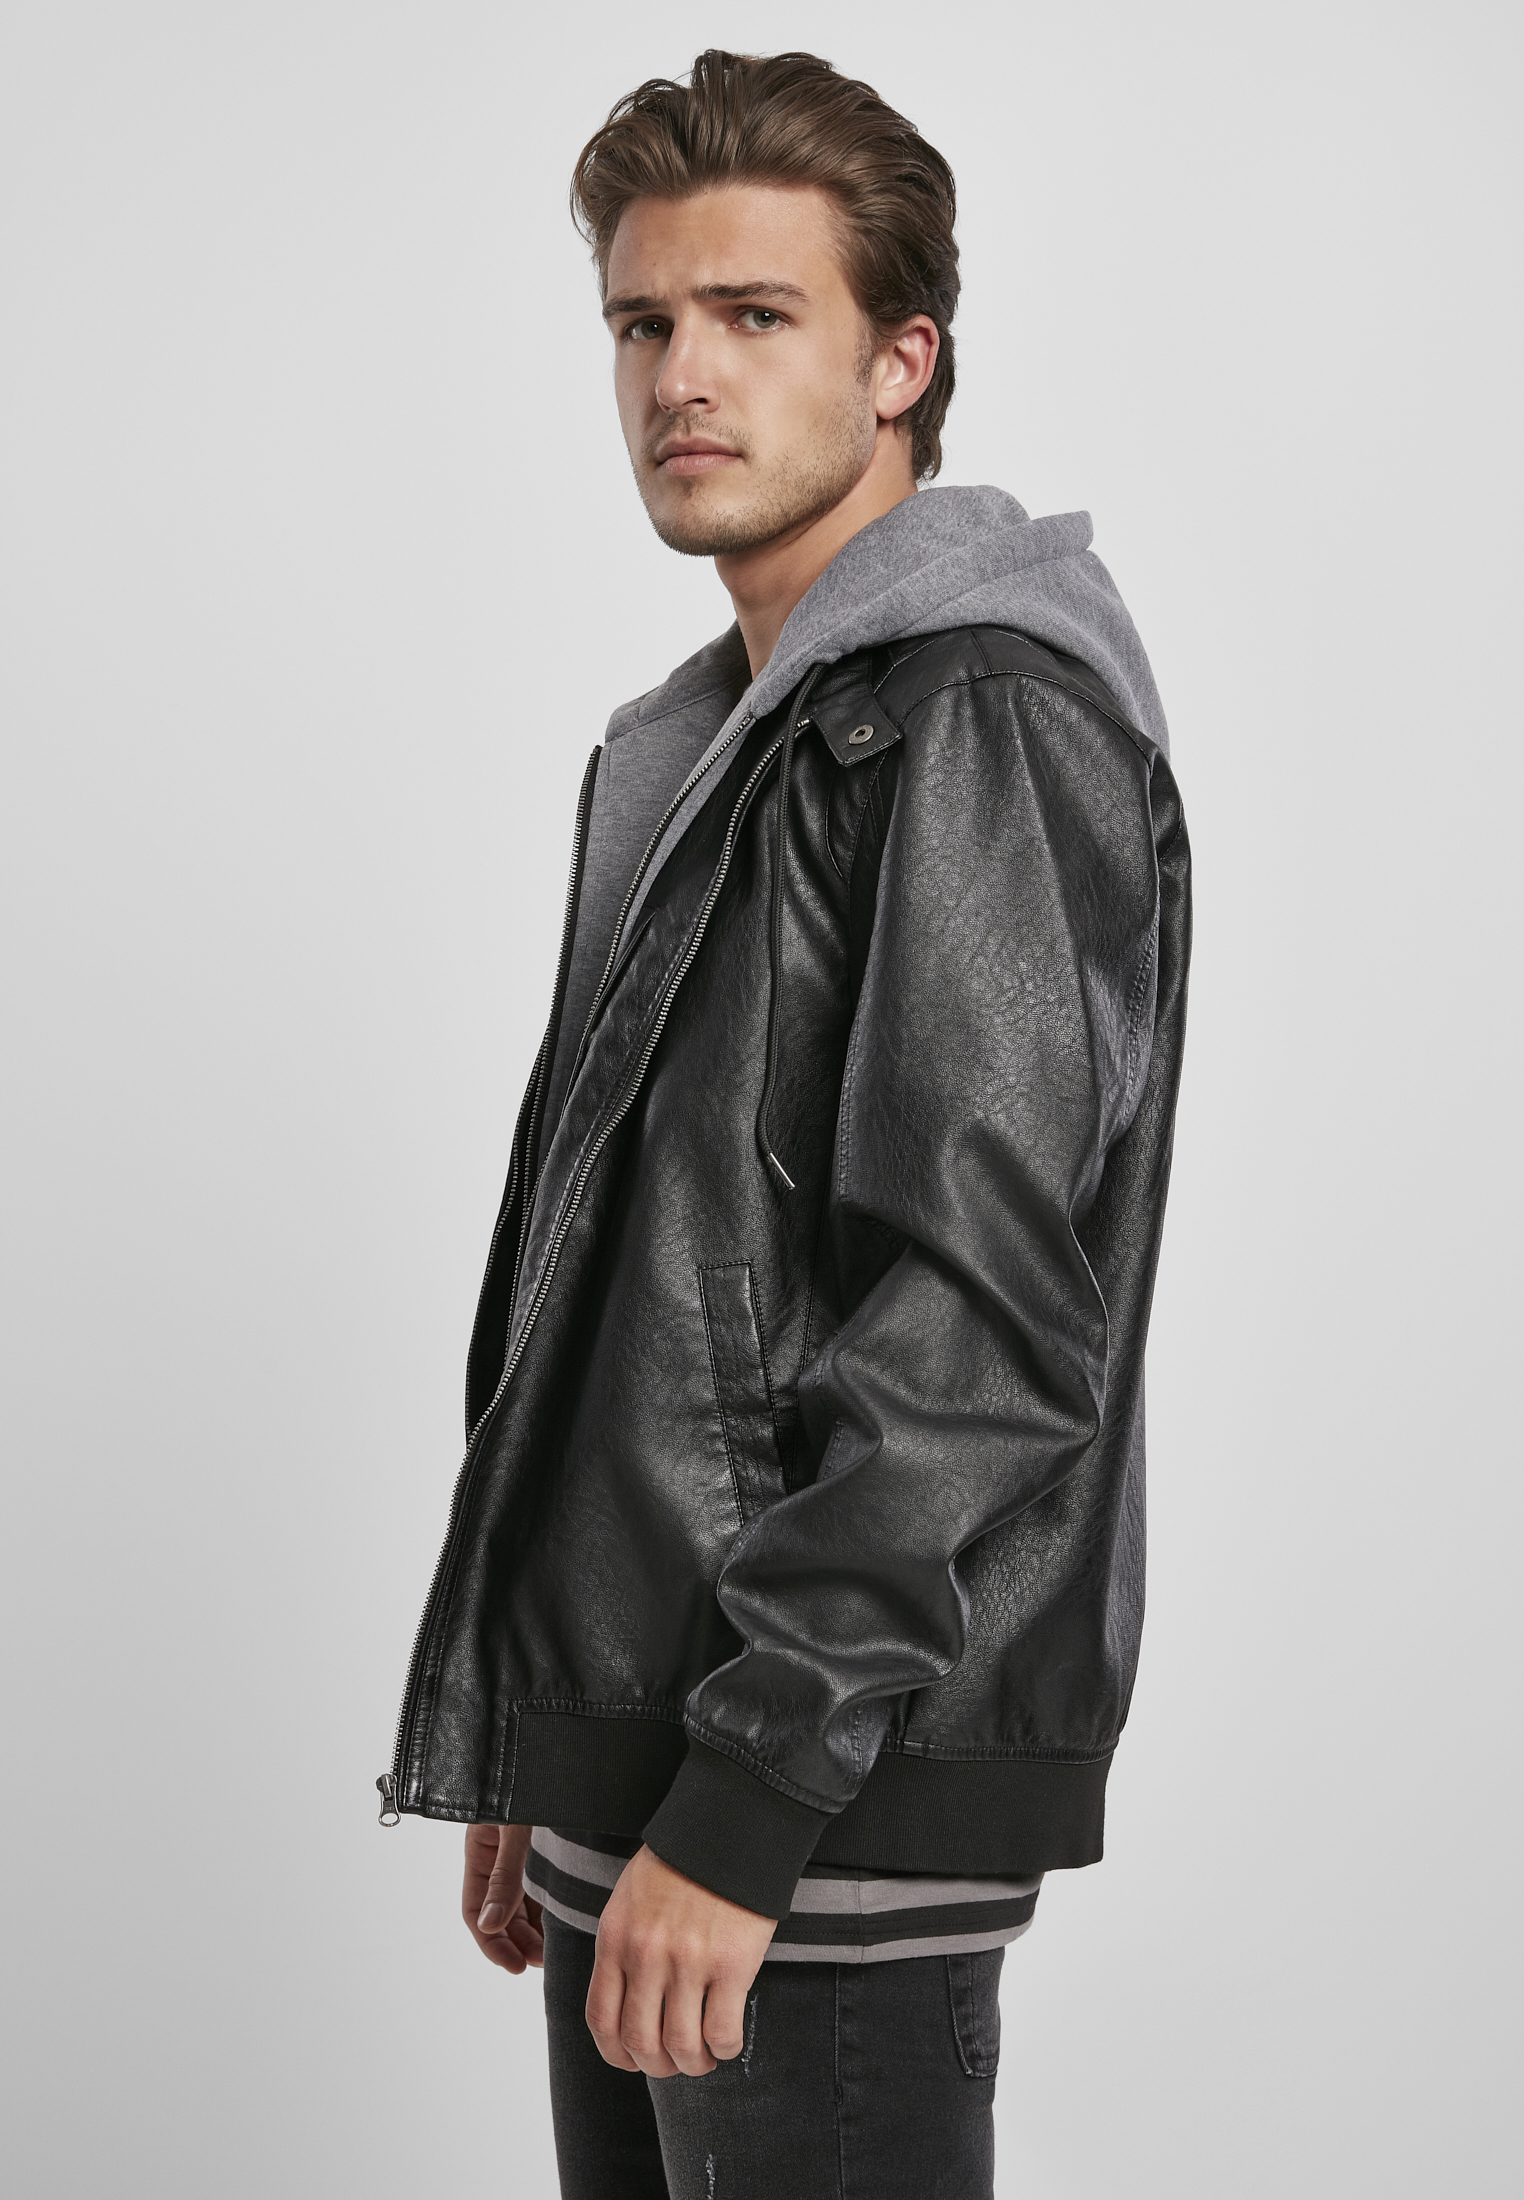 Light Jackets Fleece Hooded Fake Leather Jacket in Farbe black/grey